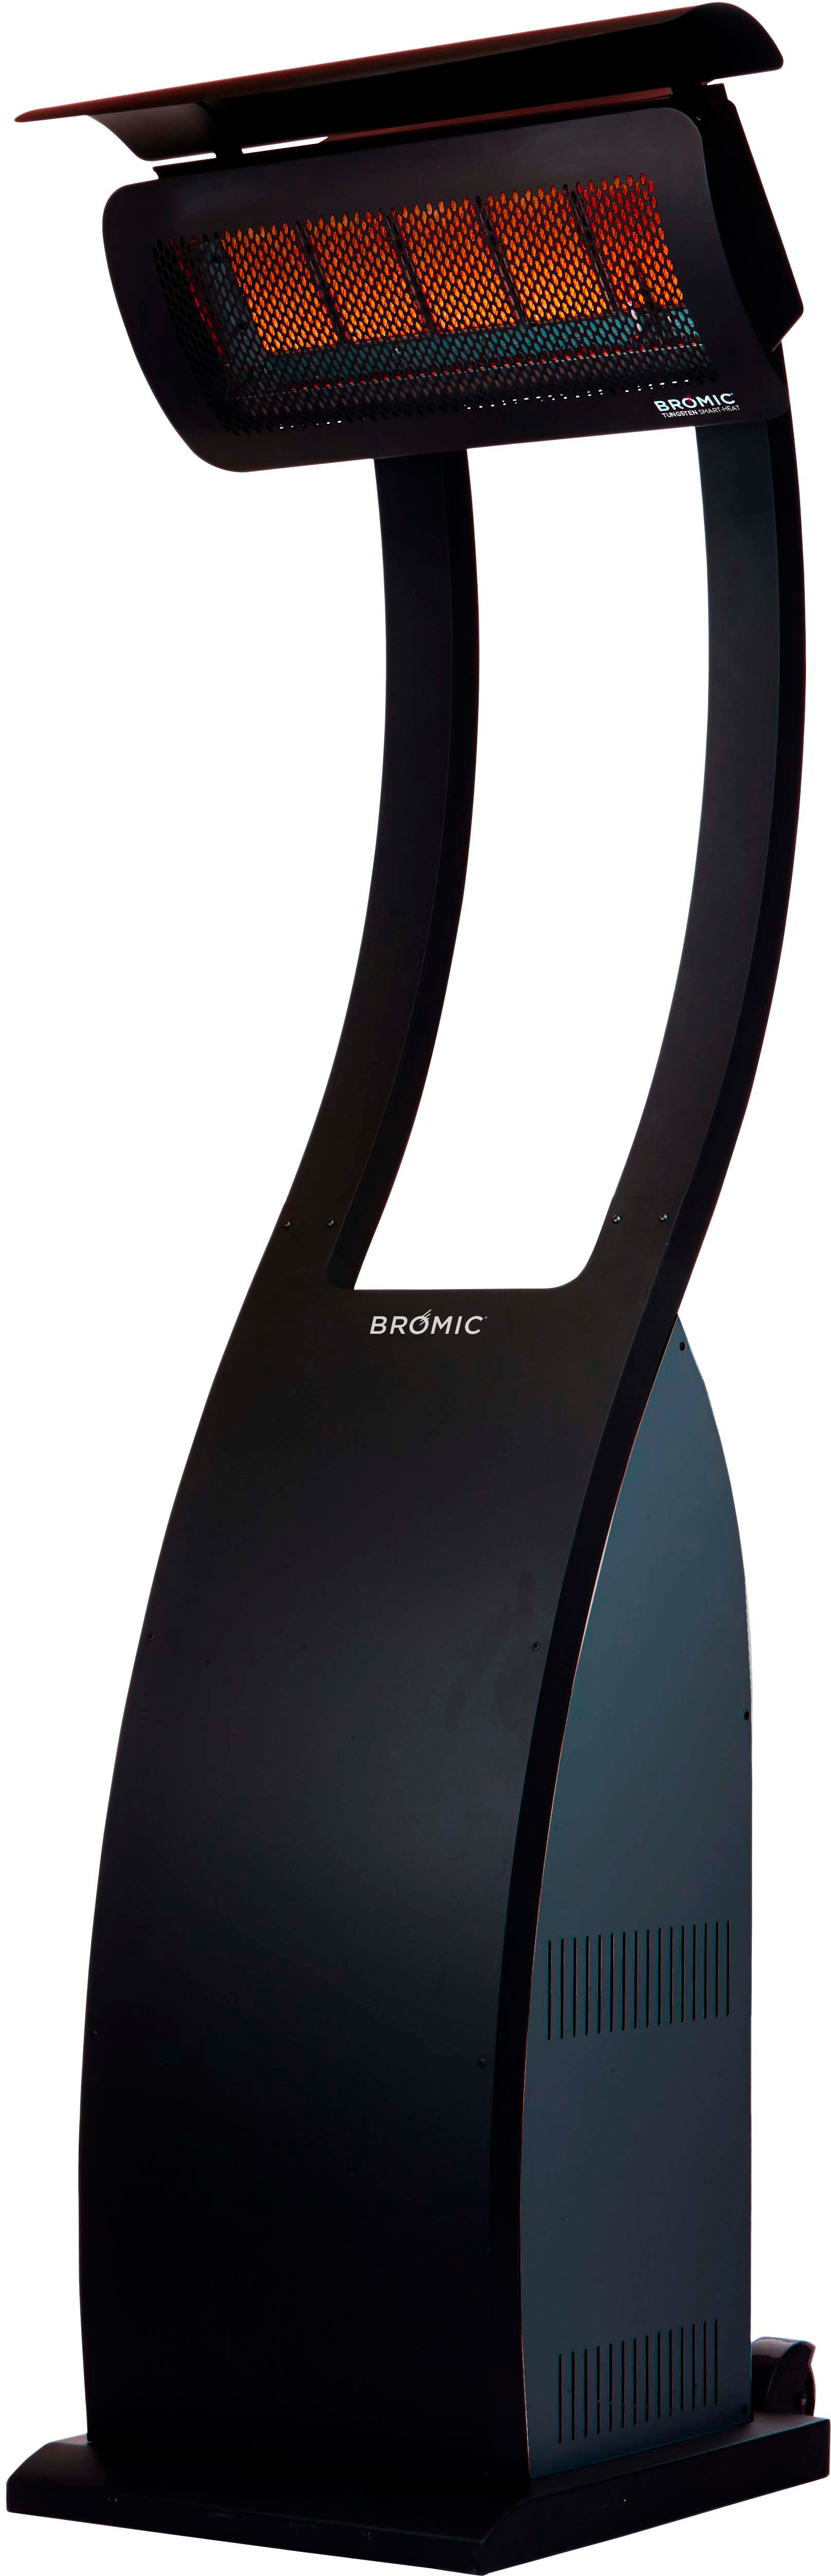 Angle View: Bromic Heating - Portable Patio Heater - Tungsten Portable - LPG - 38,500 BTU - Black - Black